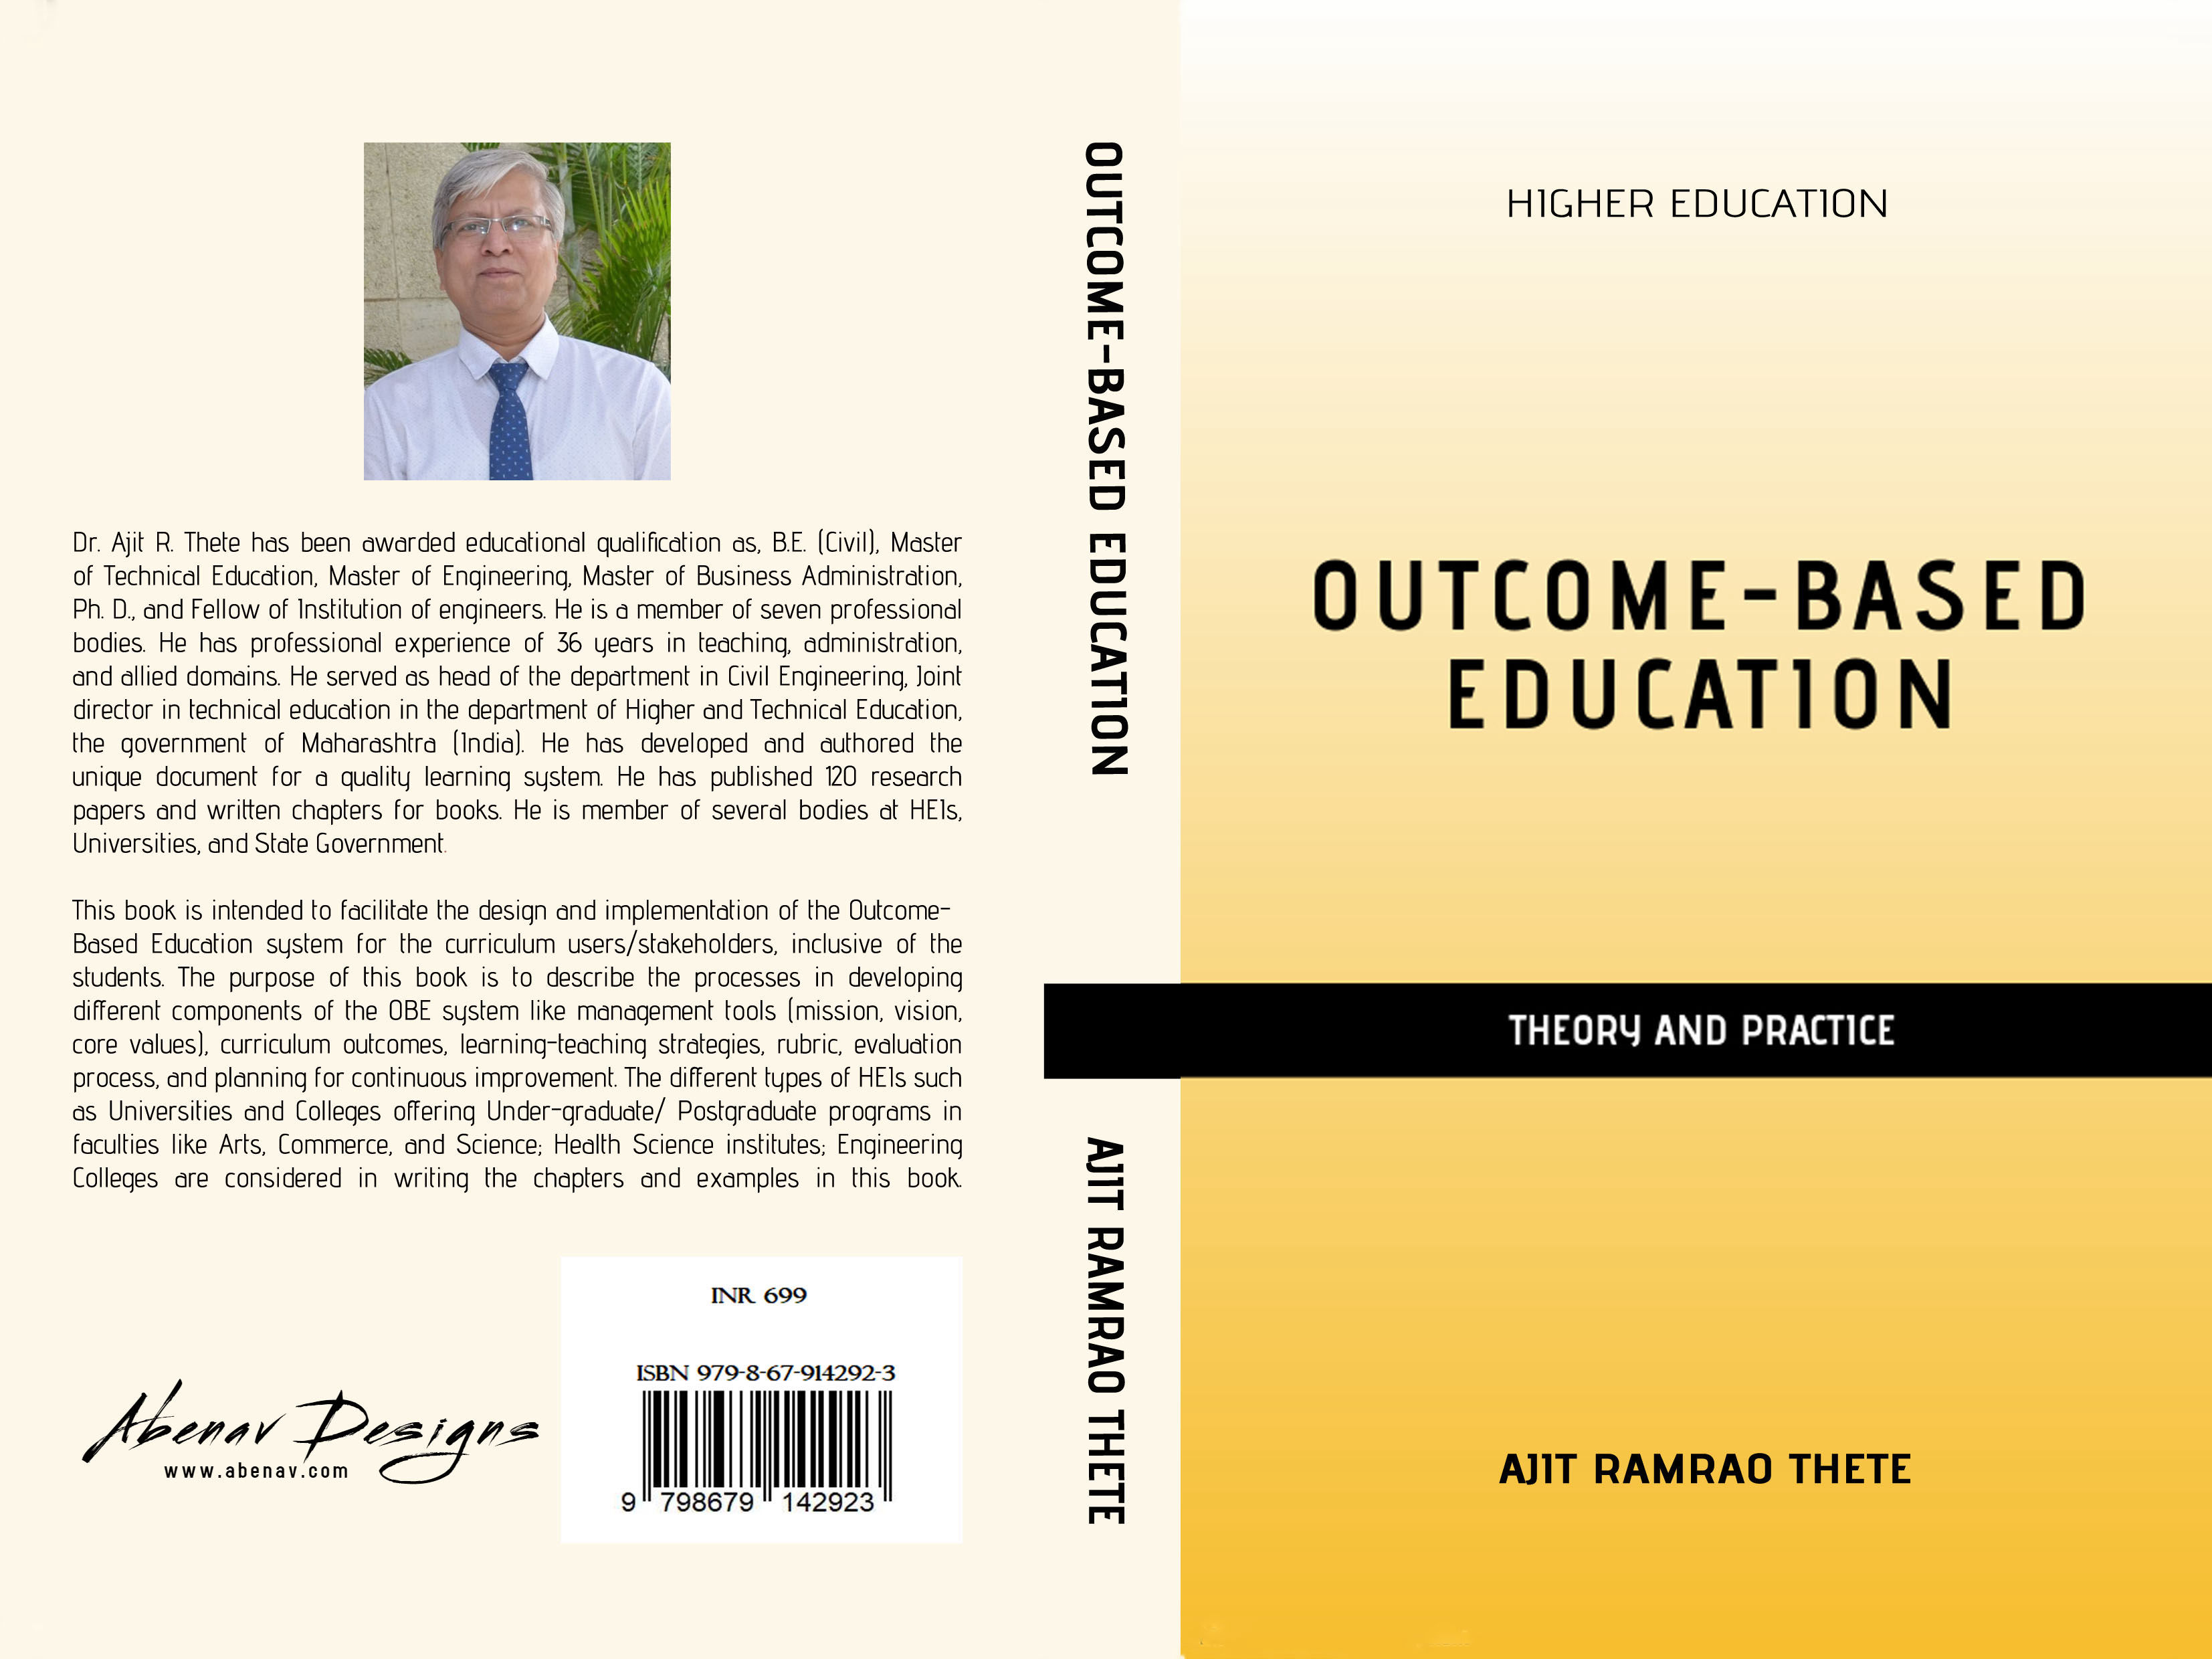 Outcome based education book